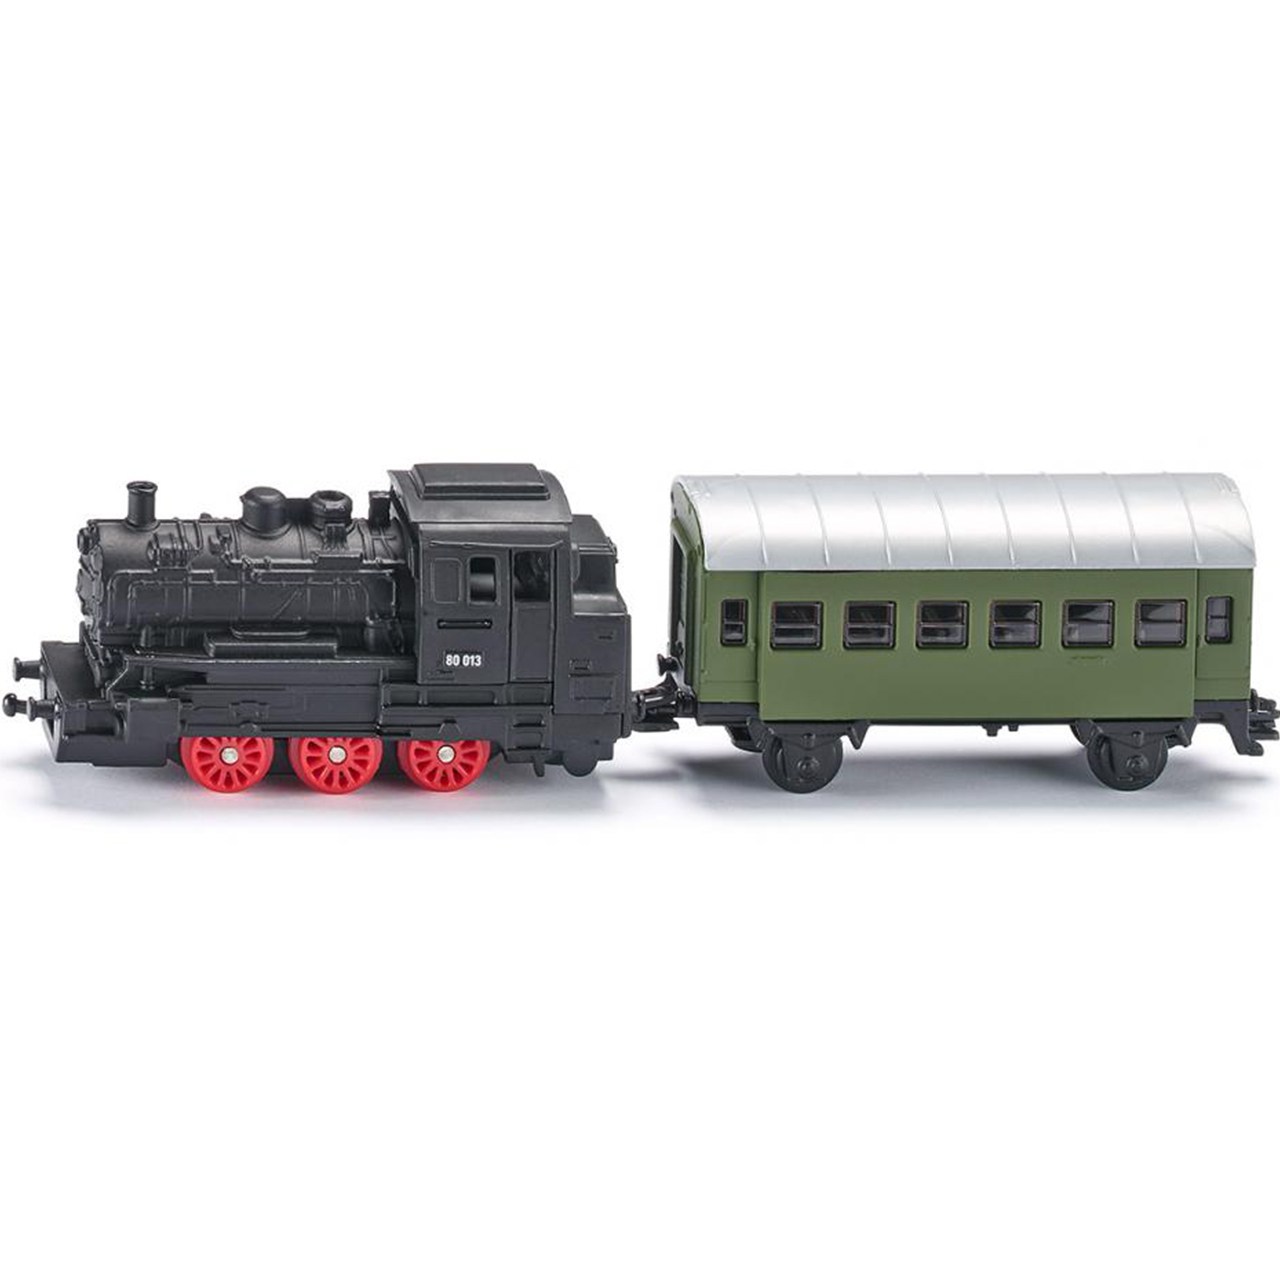 ماشین بازی Siku مدل Steam Engine With Passenger Carriage